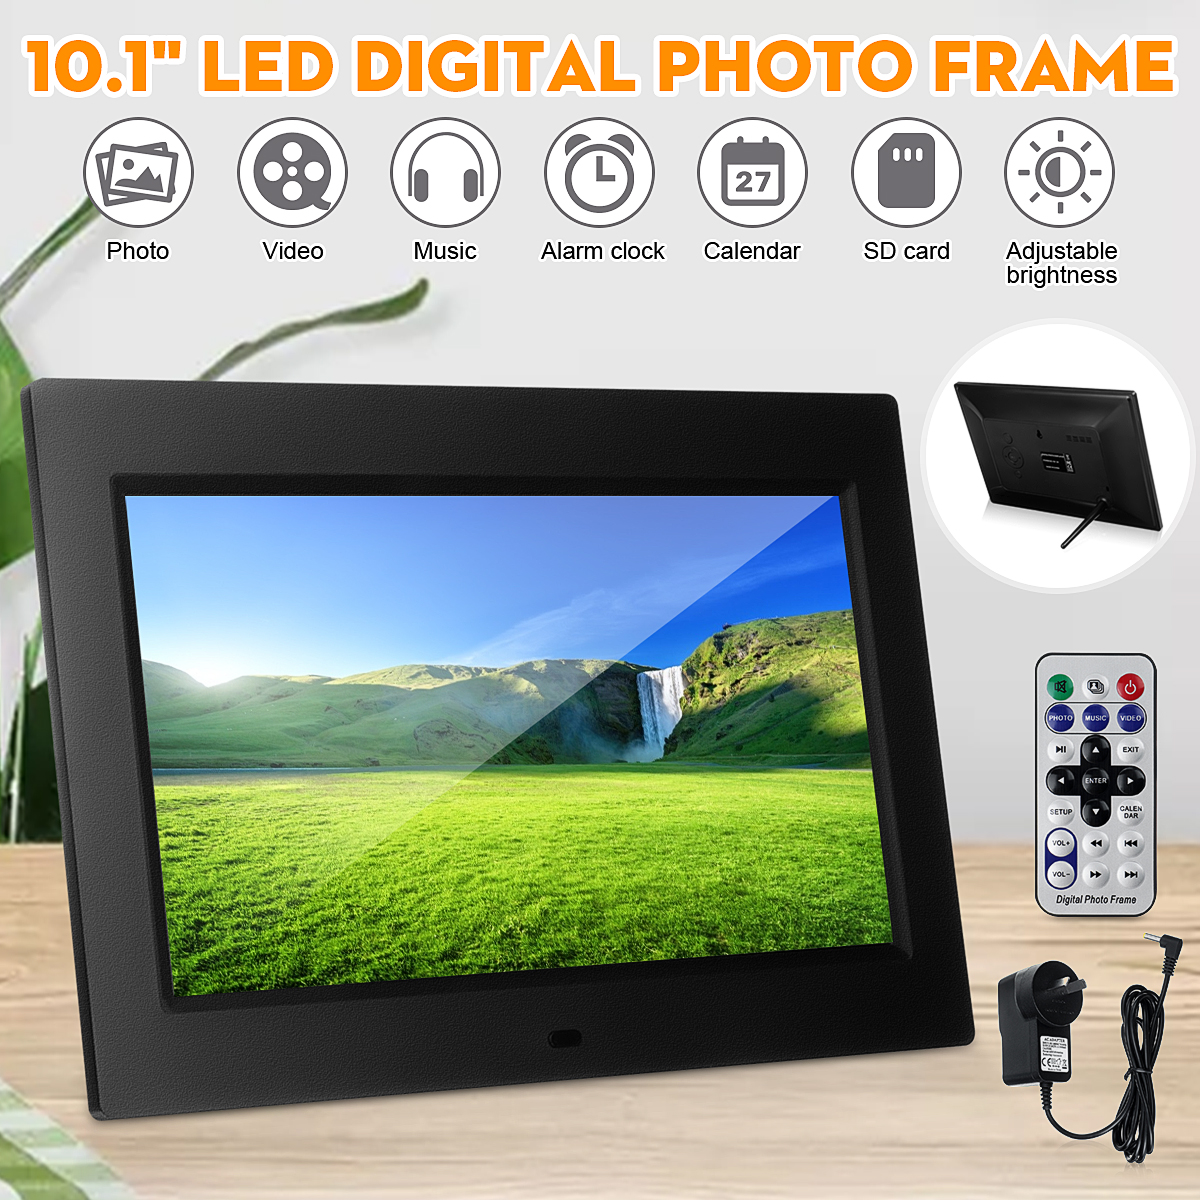 101-inch-Multifunction-LED-Digital-Photo-Frame-1024x600-Resolution-Electronic-Album-Calendar-1759538-1